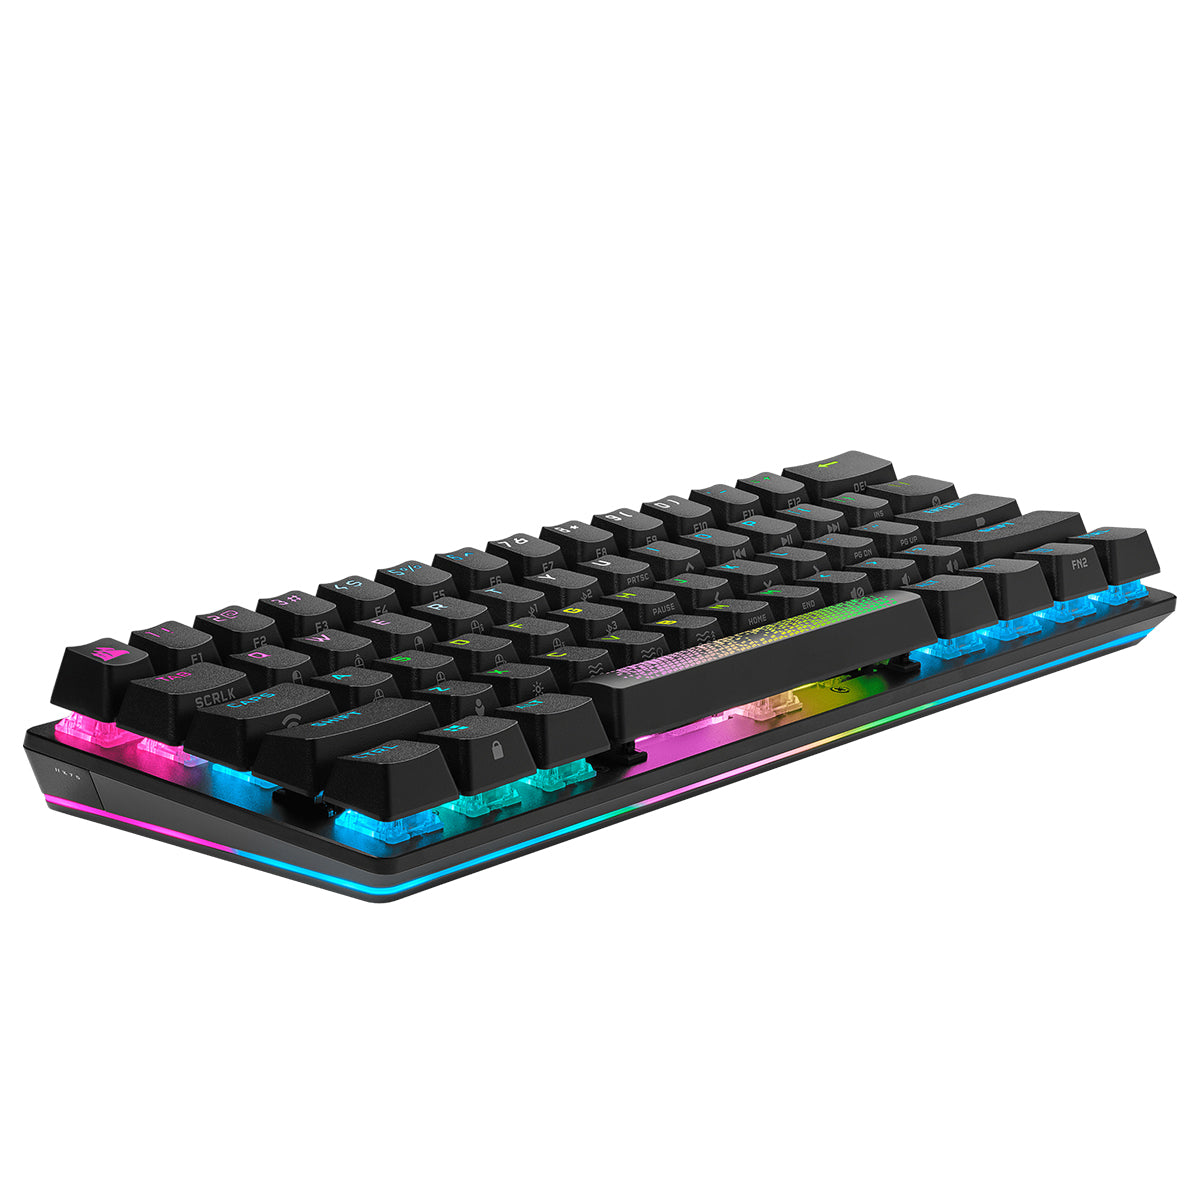 Corsair K70 PRO MINI Wireless Gaming Keyboard MX RED RGB